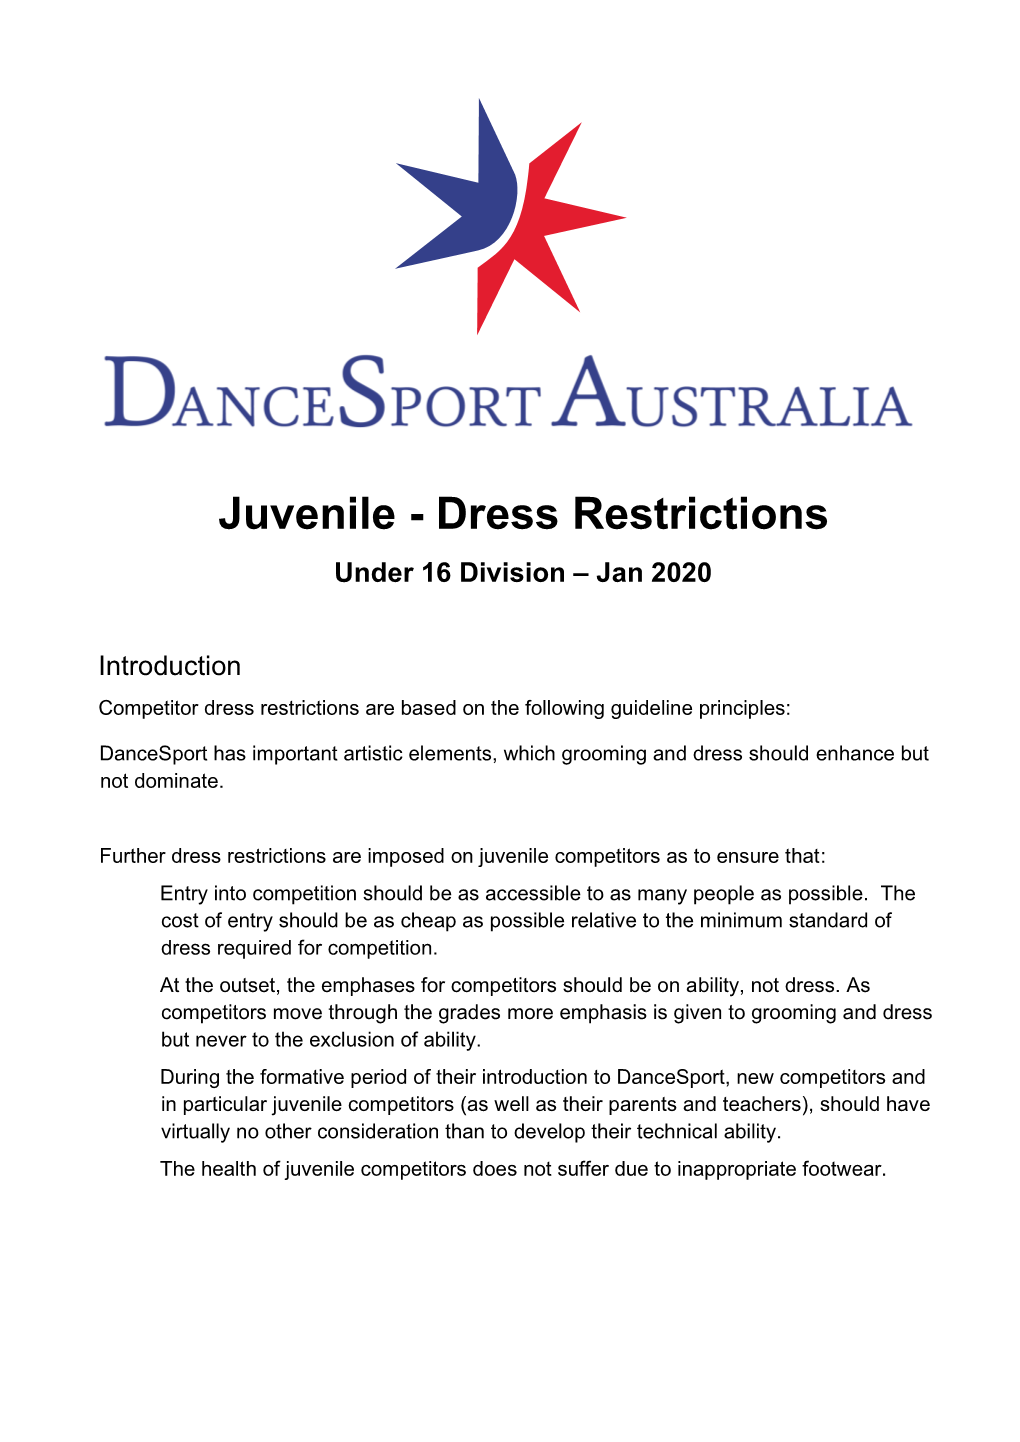 Juvenile Dress Code